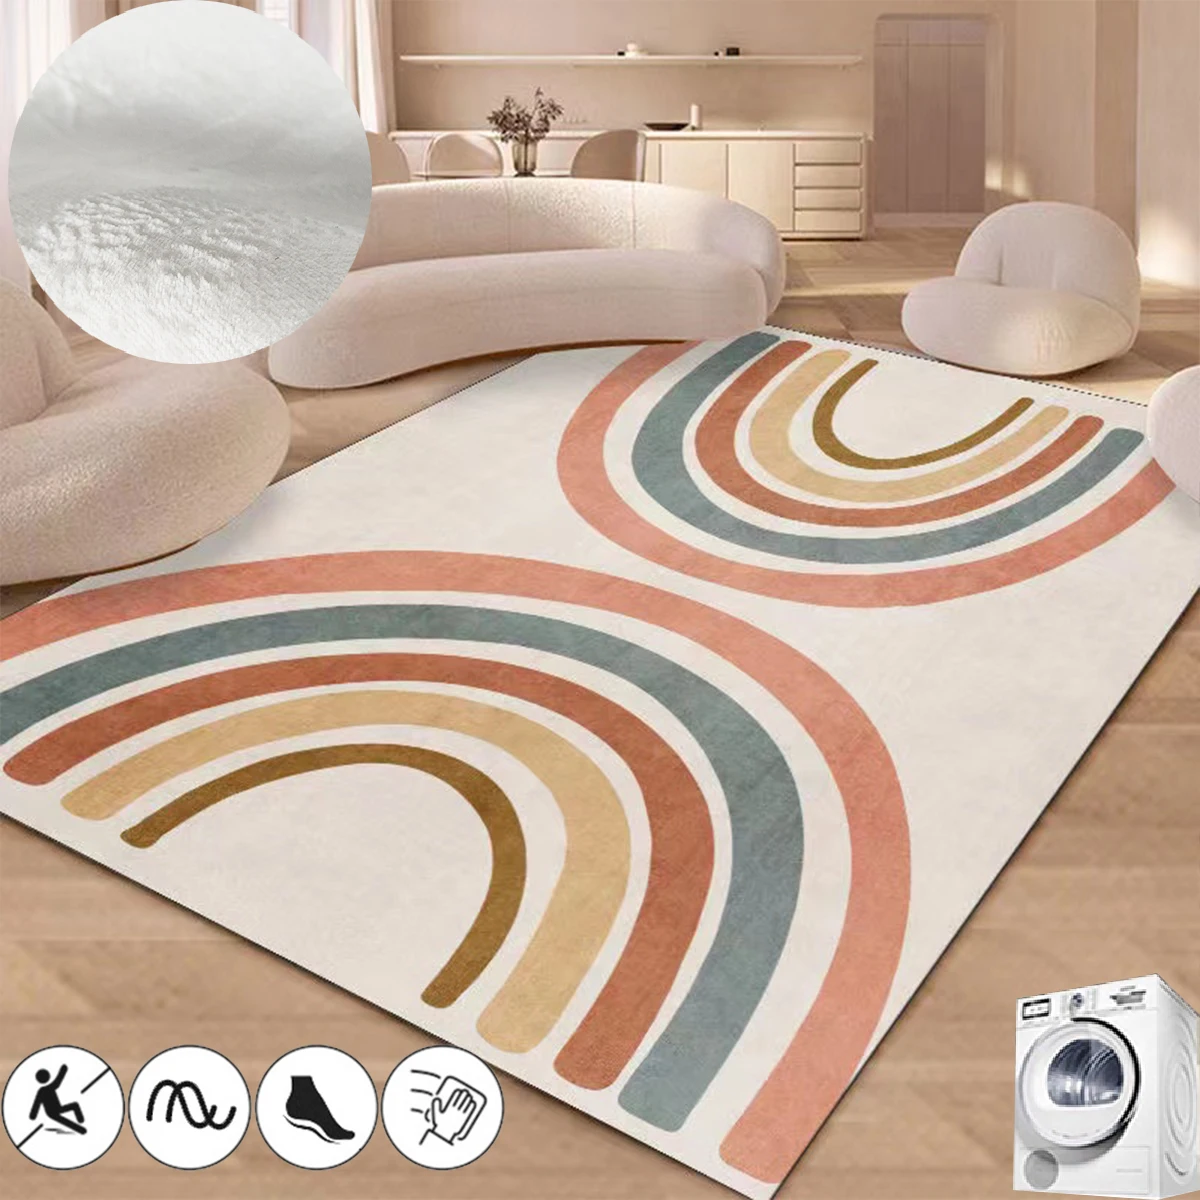 https://ae01.alicdn.com/kf/S6f1a0eaac41044a88155ebeb7fdcb78aH/Morandi-Style-Carpets-for-Living-Room-Rainbow-Bridge-Rugs-for-Bedroom-Soft-Flannel-Cloakroom-Mat-Non.jpg